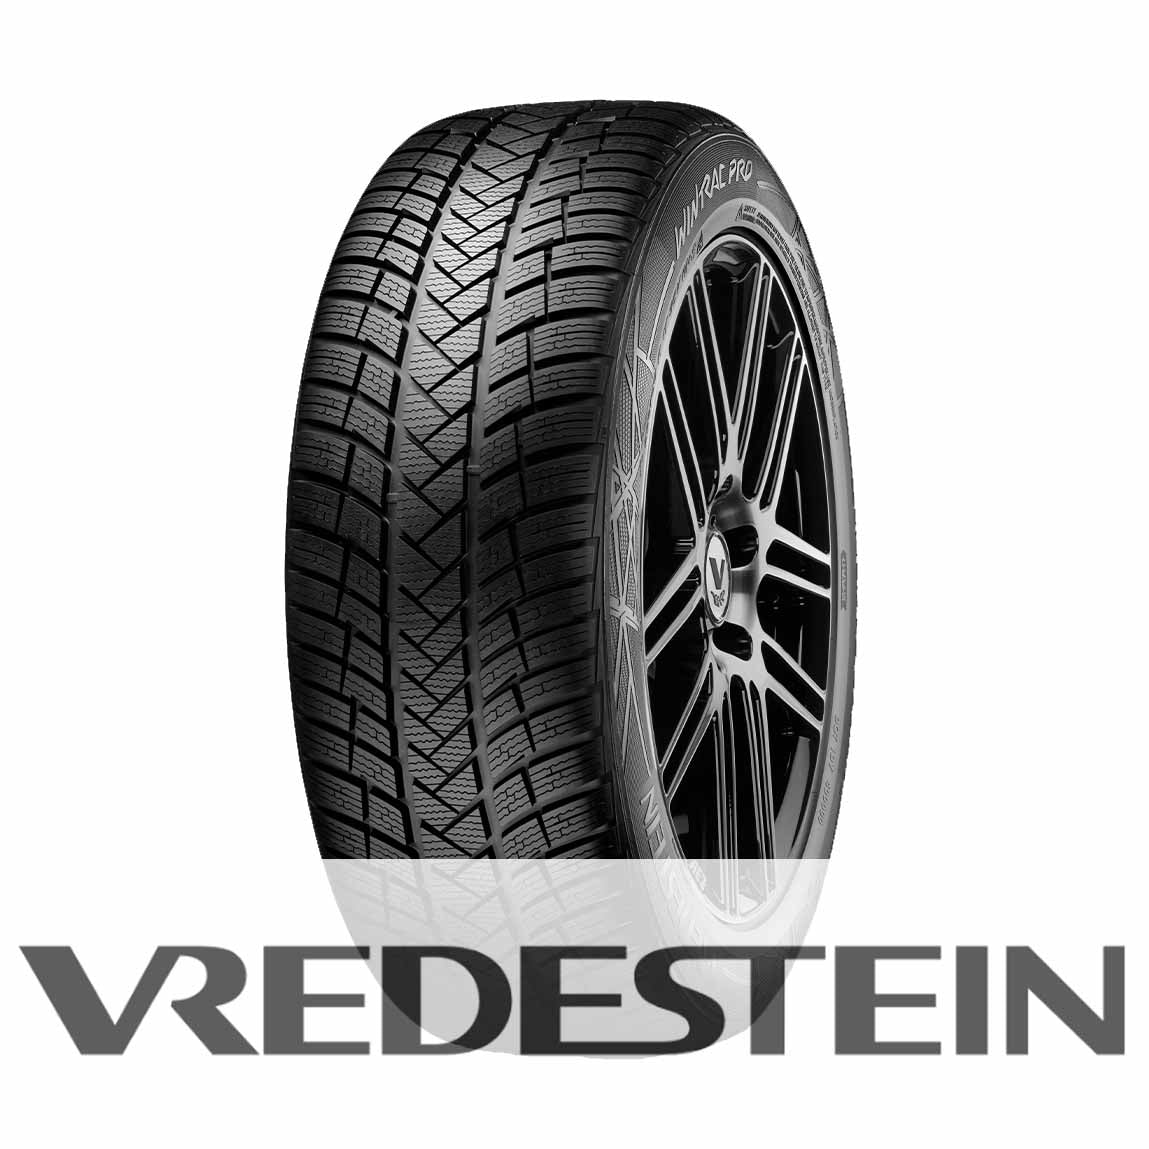 Vredestein Wintrac Pro 225/60 R18 104V XL